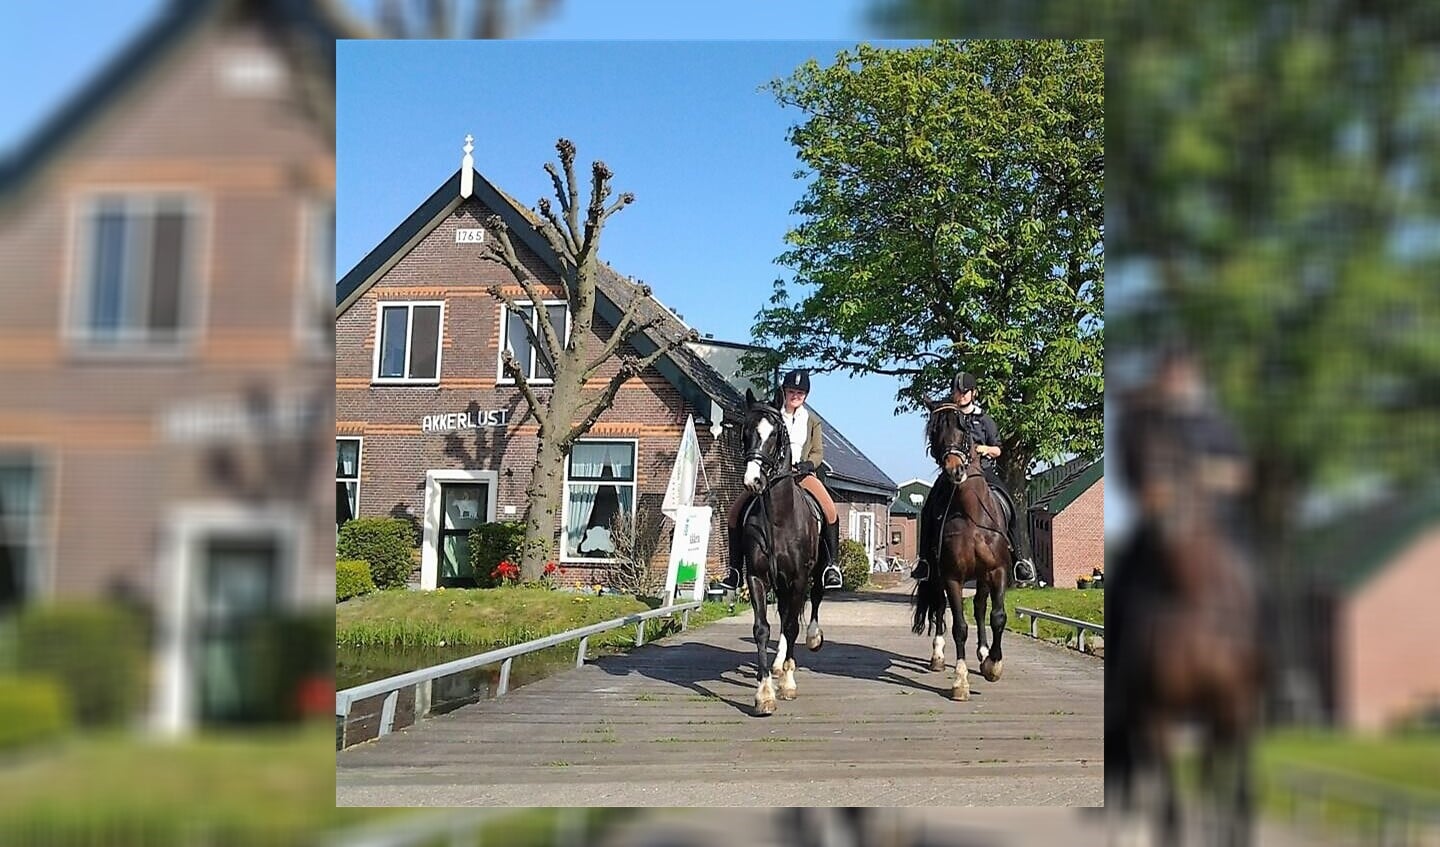 Hotelboerderij Akkerlust aan de Stompwijkseweg in Leidschendam (foto: Hotelboerderij).